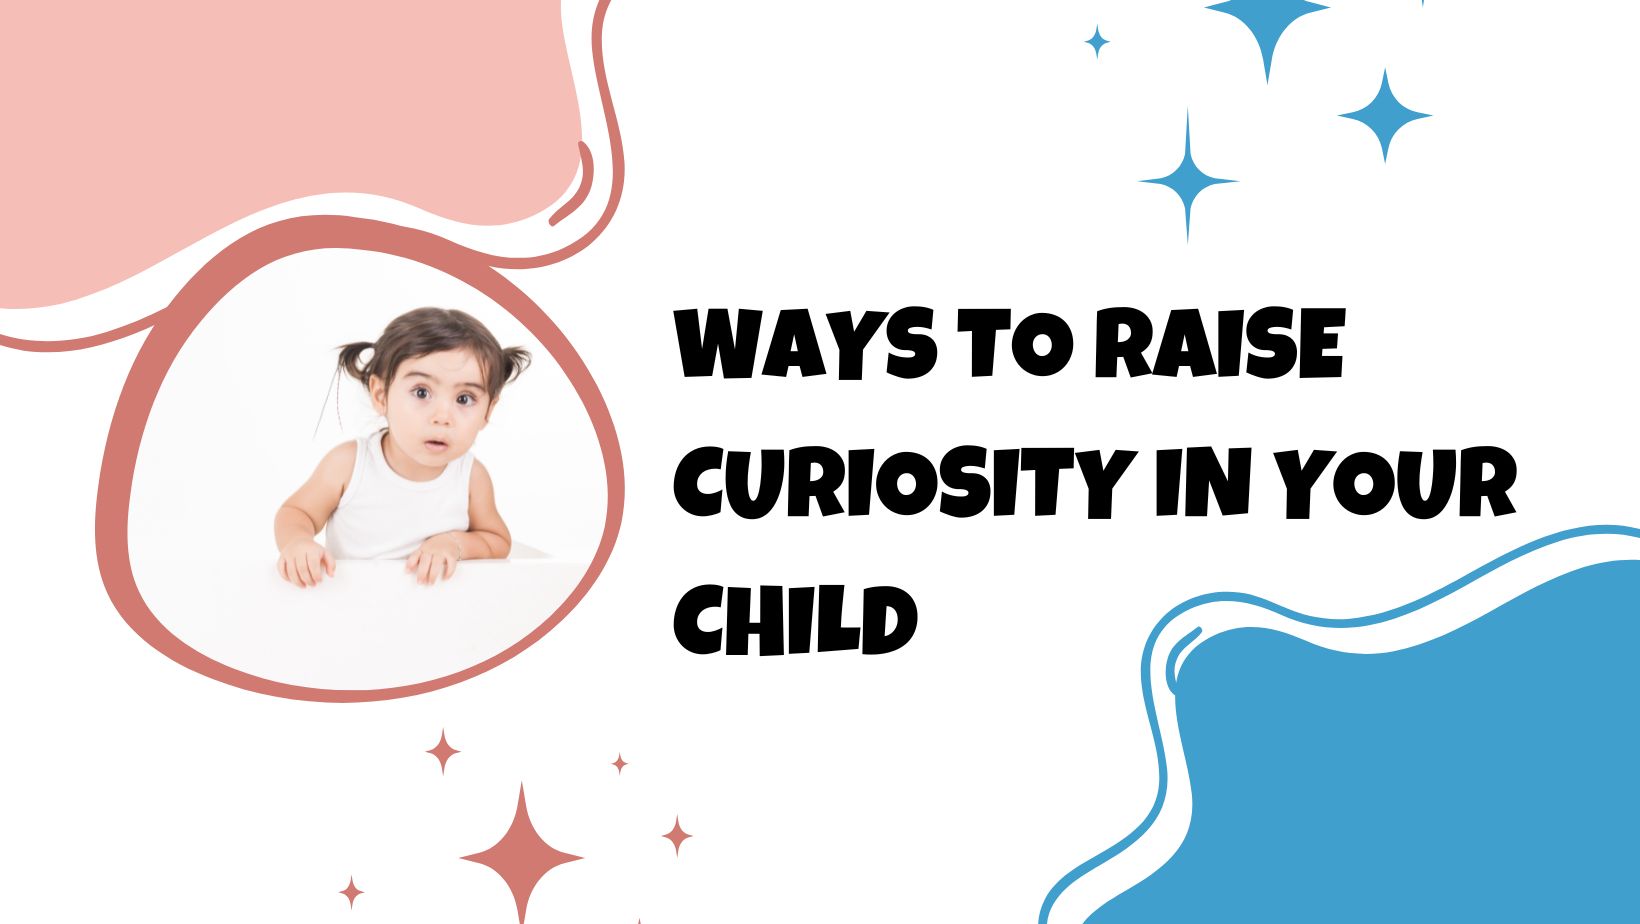 Ways to Raise Curiosity in Your Child